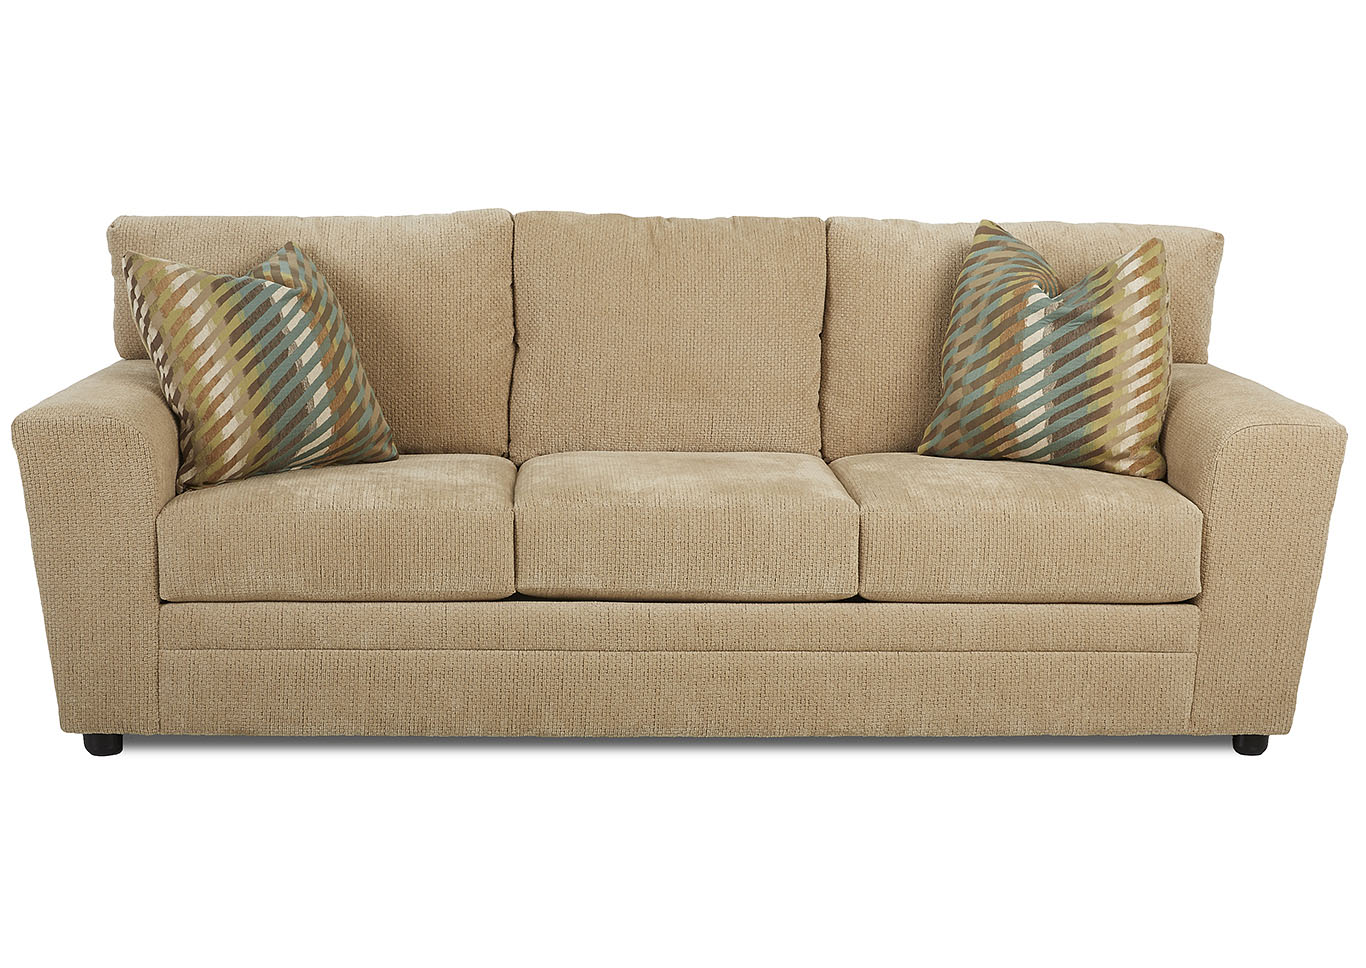 Ashburn Fabric Sleeper Sofa,Klaussner Home Furnishings